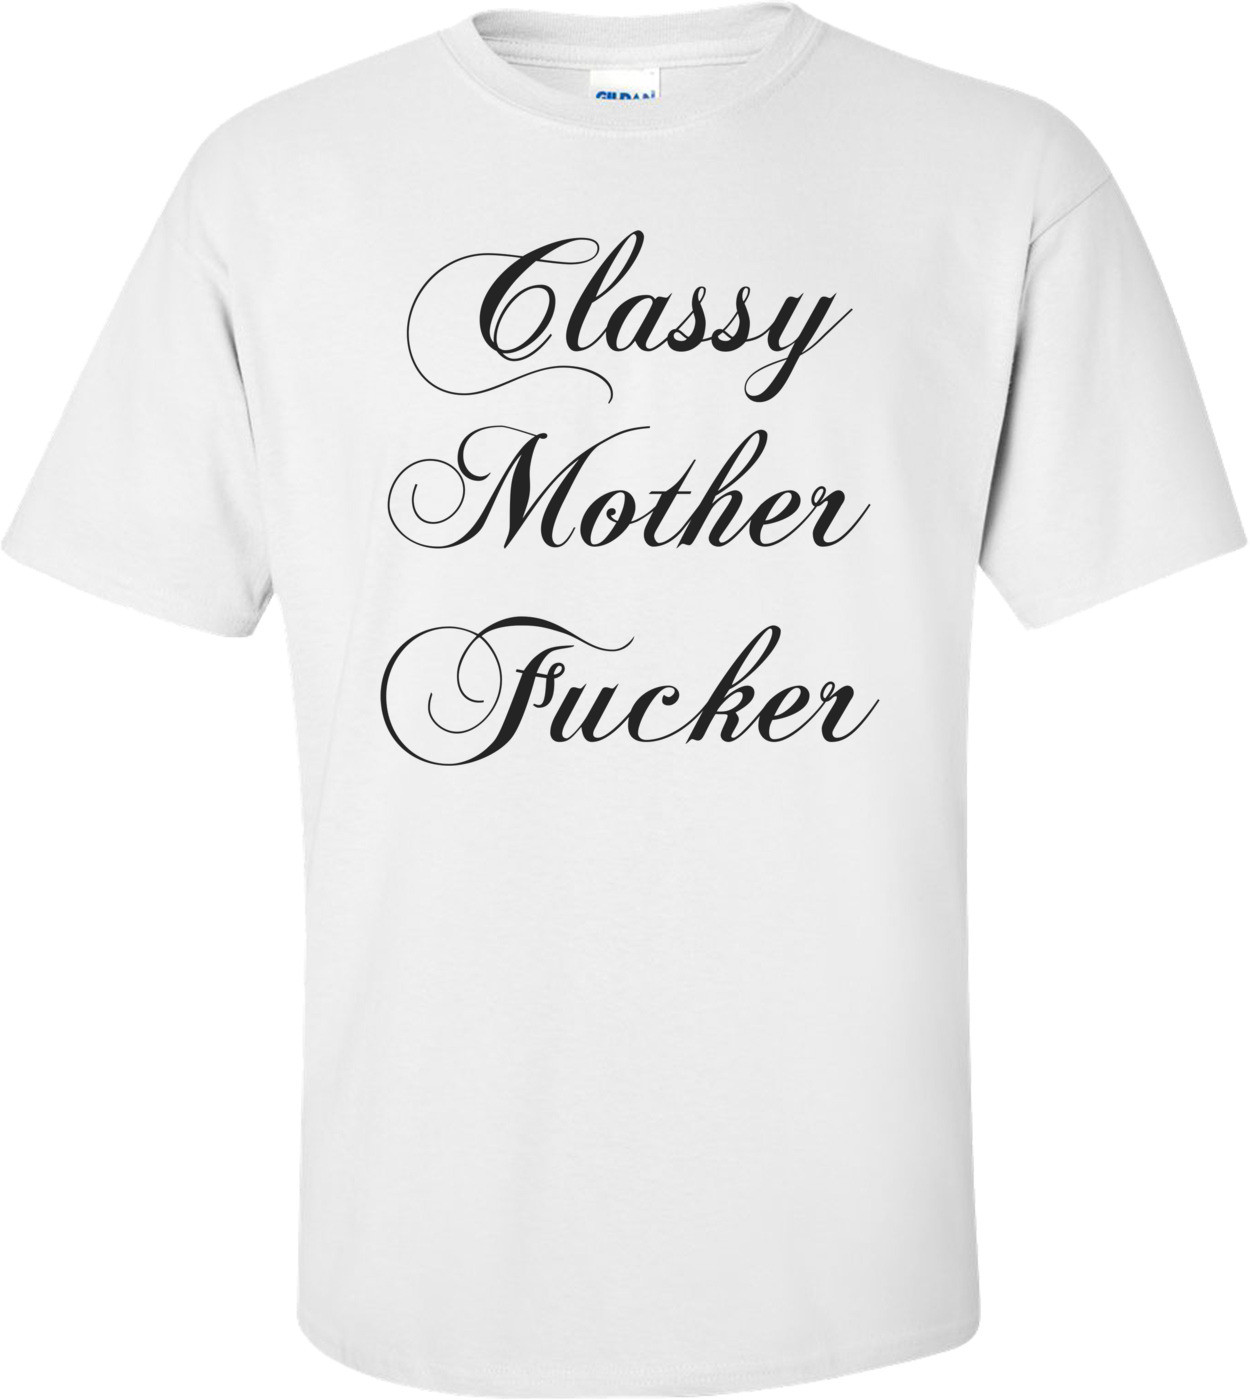 Classy Mother Fucker Shirt